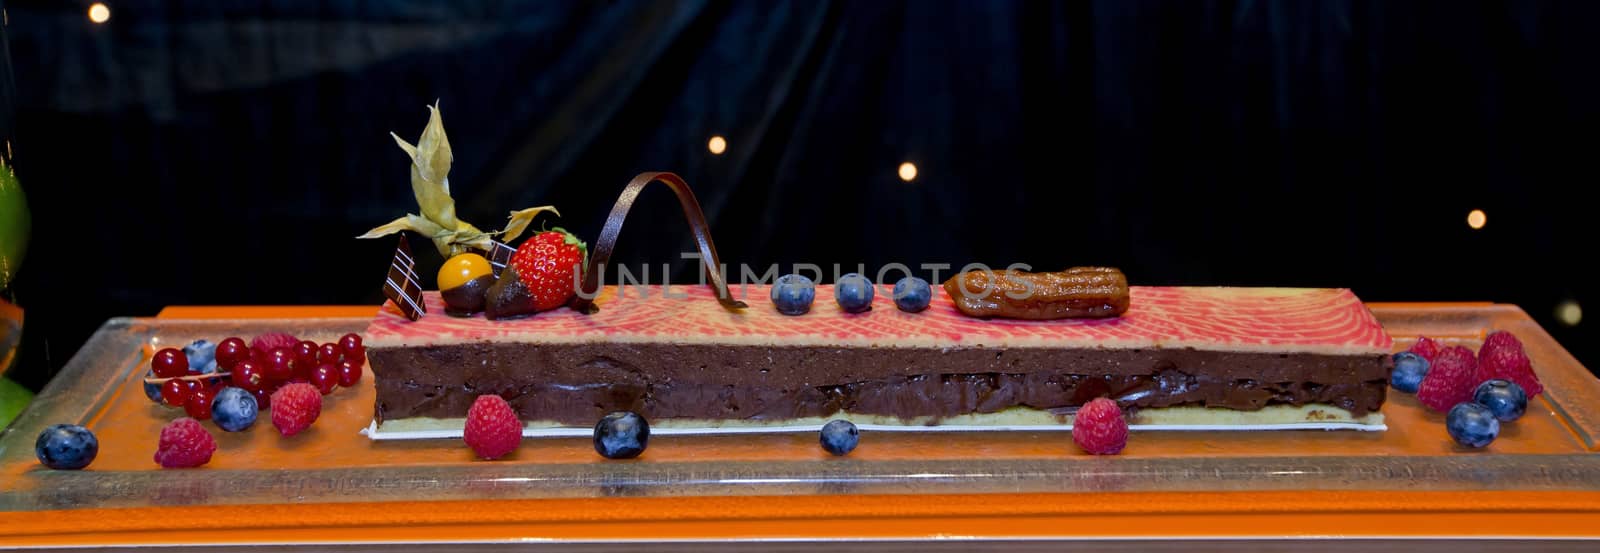 Dark chocolate cake with fresh fruit topping and around display  by art9858